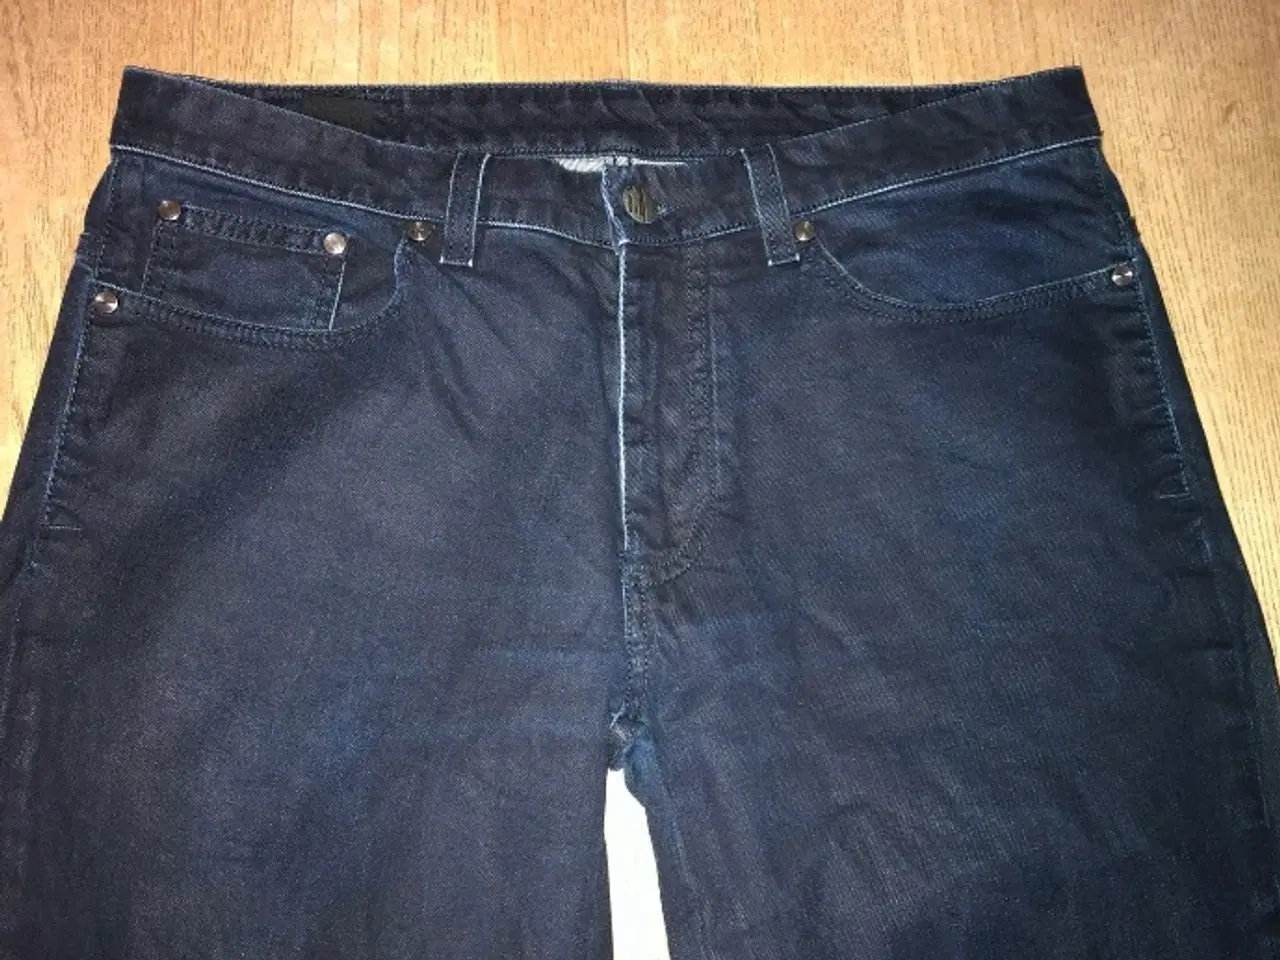 Billede 2 - Sorte jeans fra Karl Lagerfeld str. 33/34